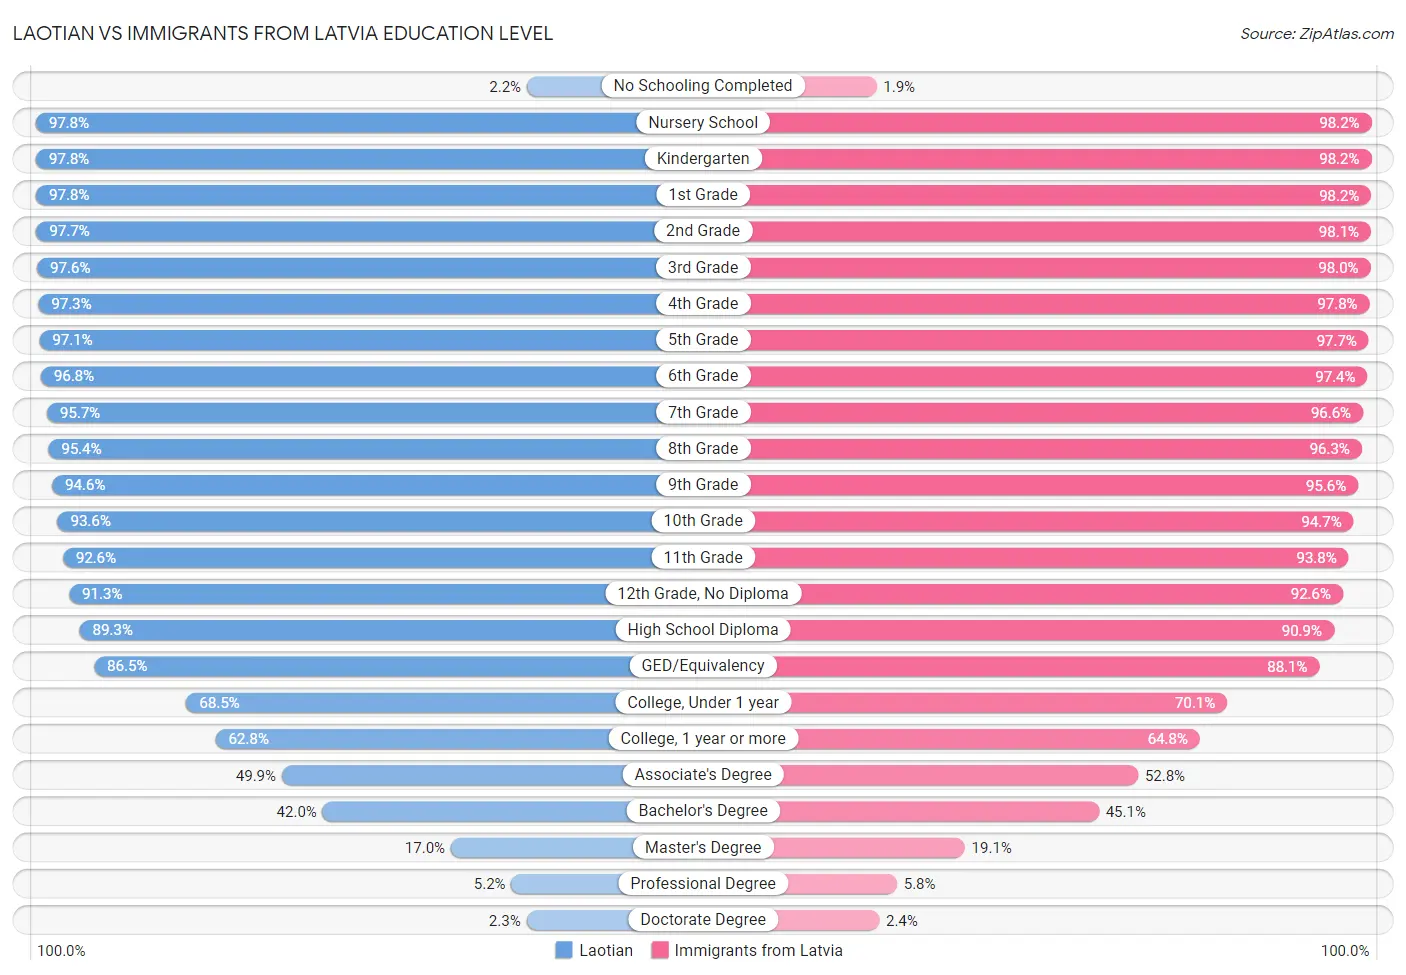 Laotian vs Immigrants from Latvia Education Level